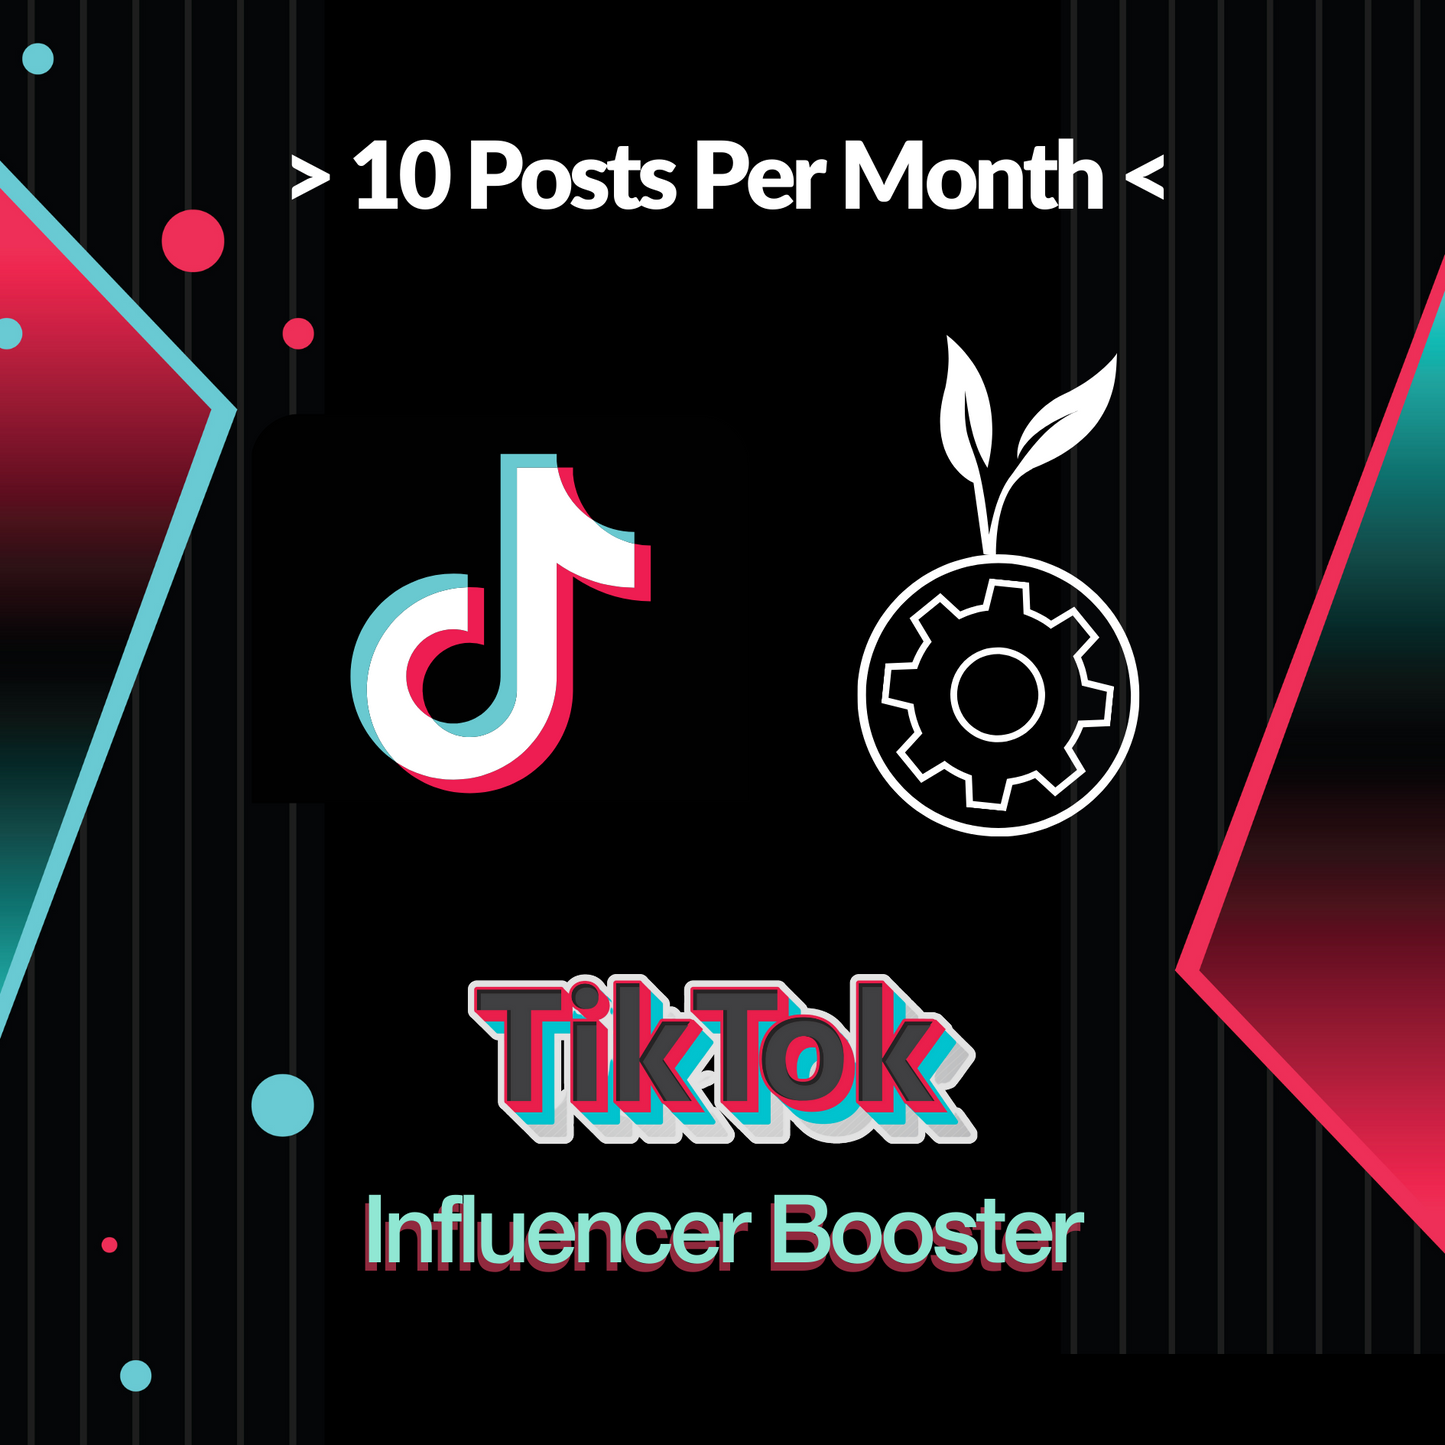 TikTok Influencer Booster | 10 Posts Per Month